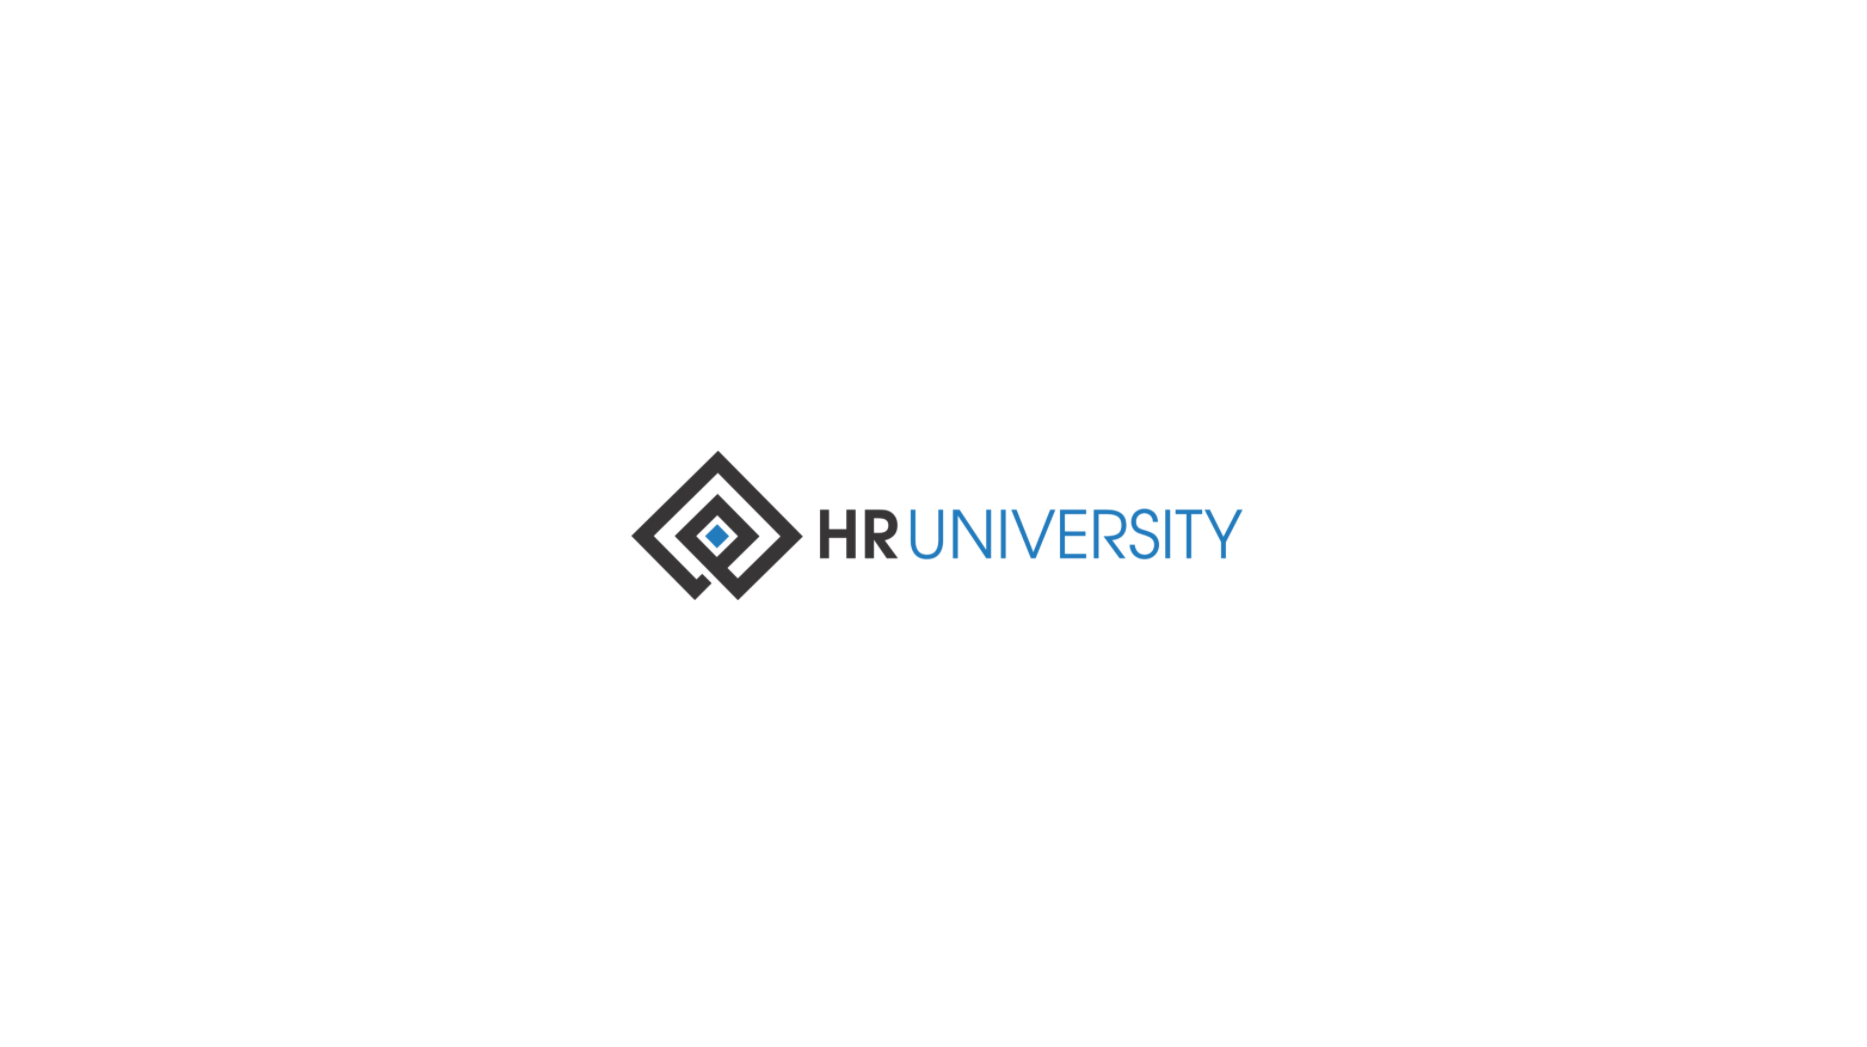 HR university